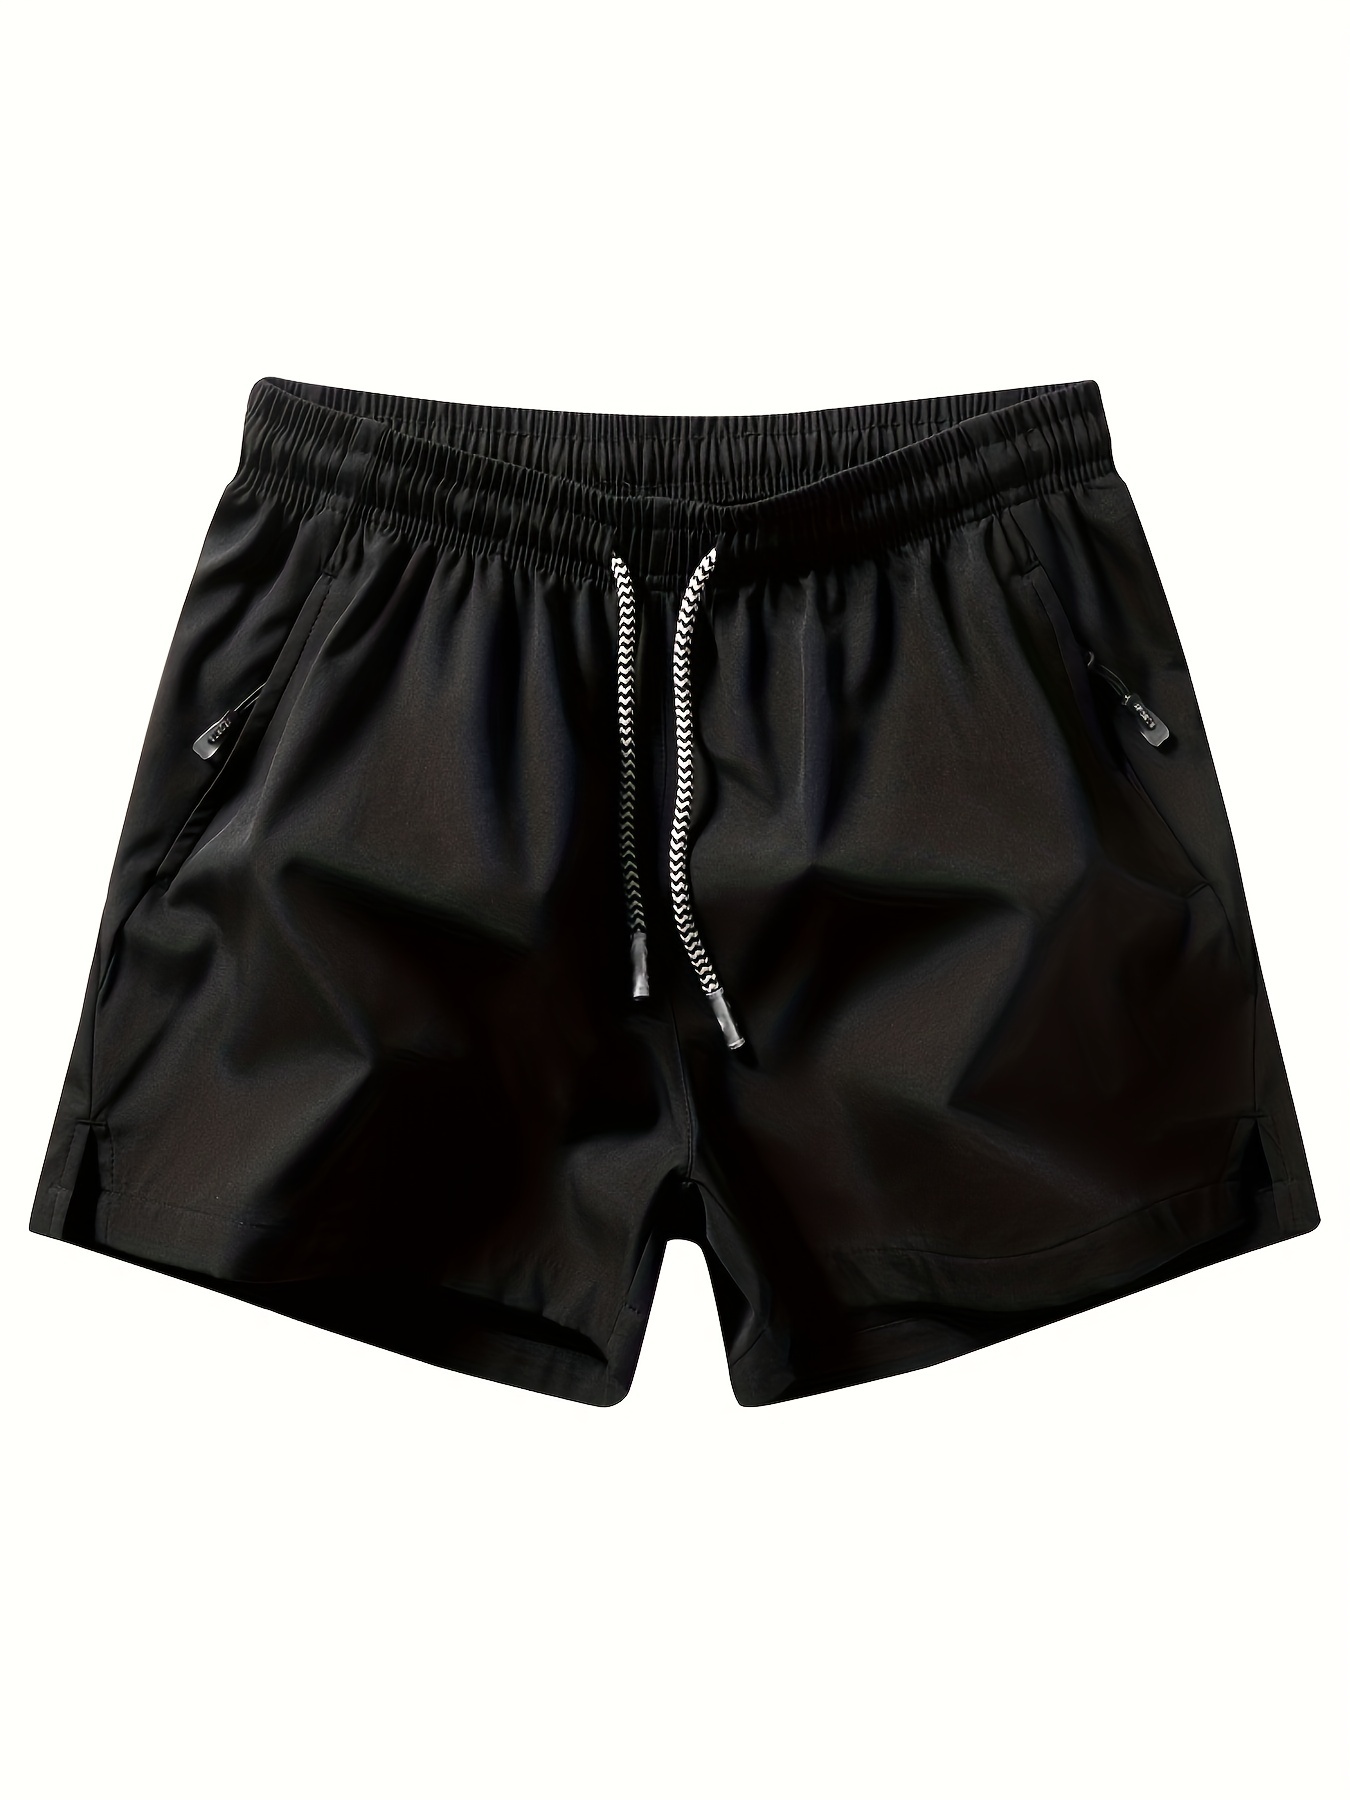 img.kwcdn.com/product/zipper-pockets-active-shorts